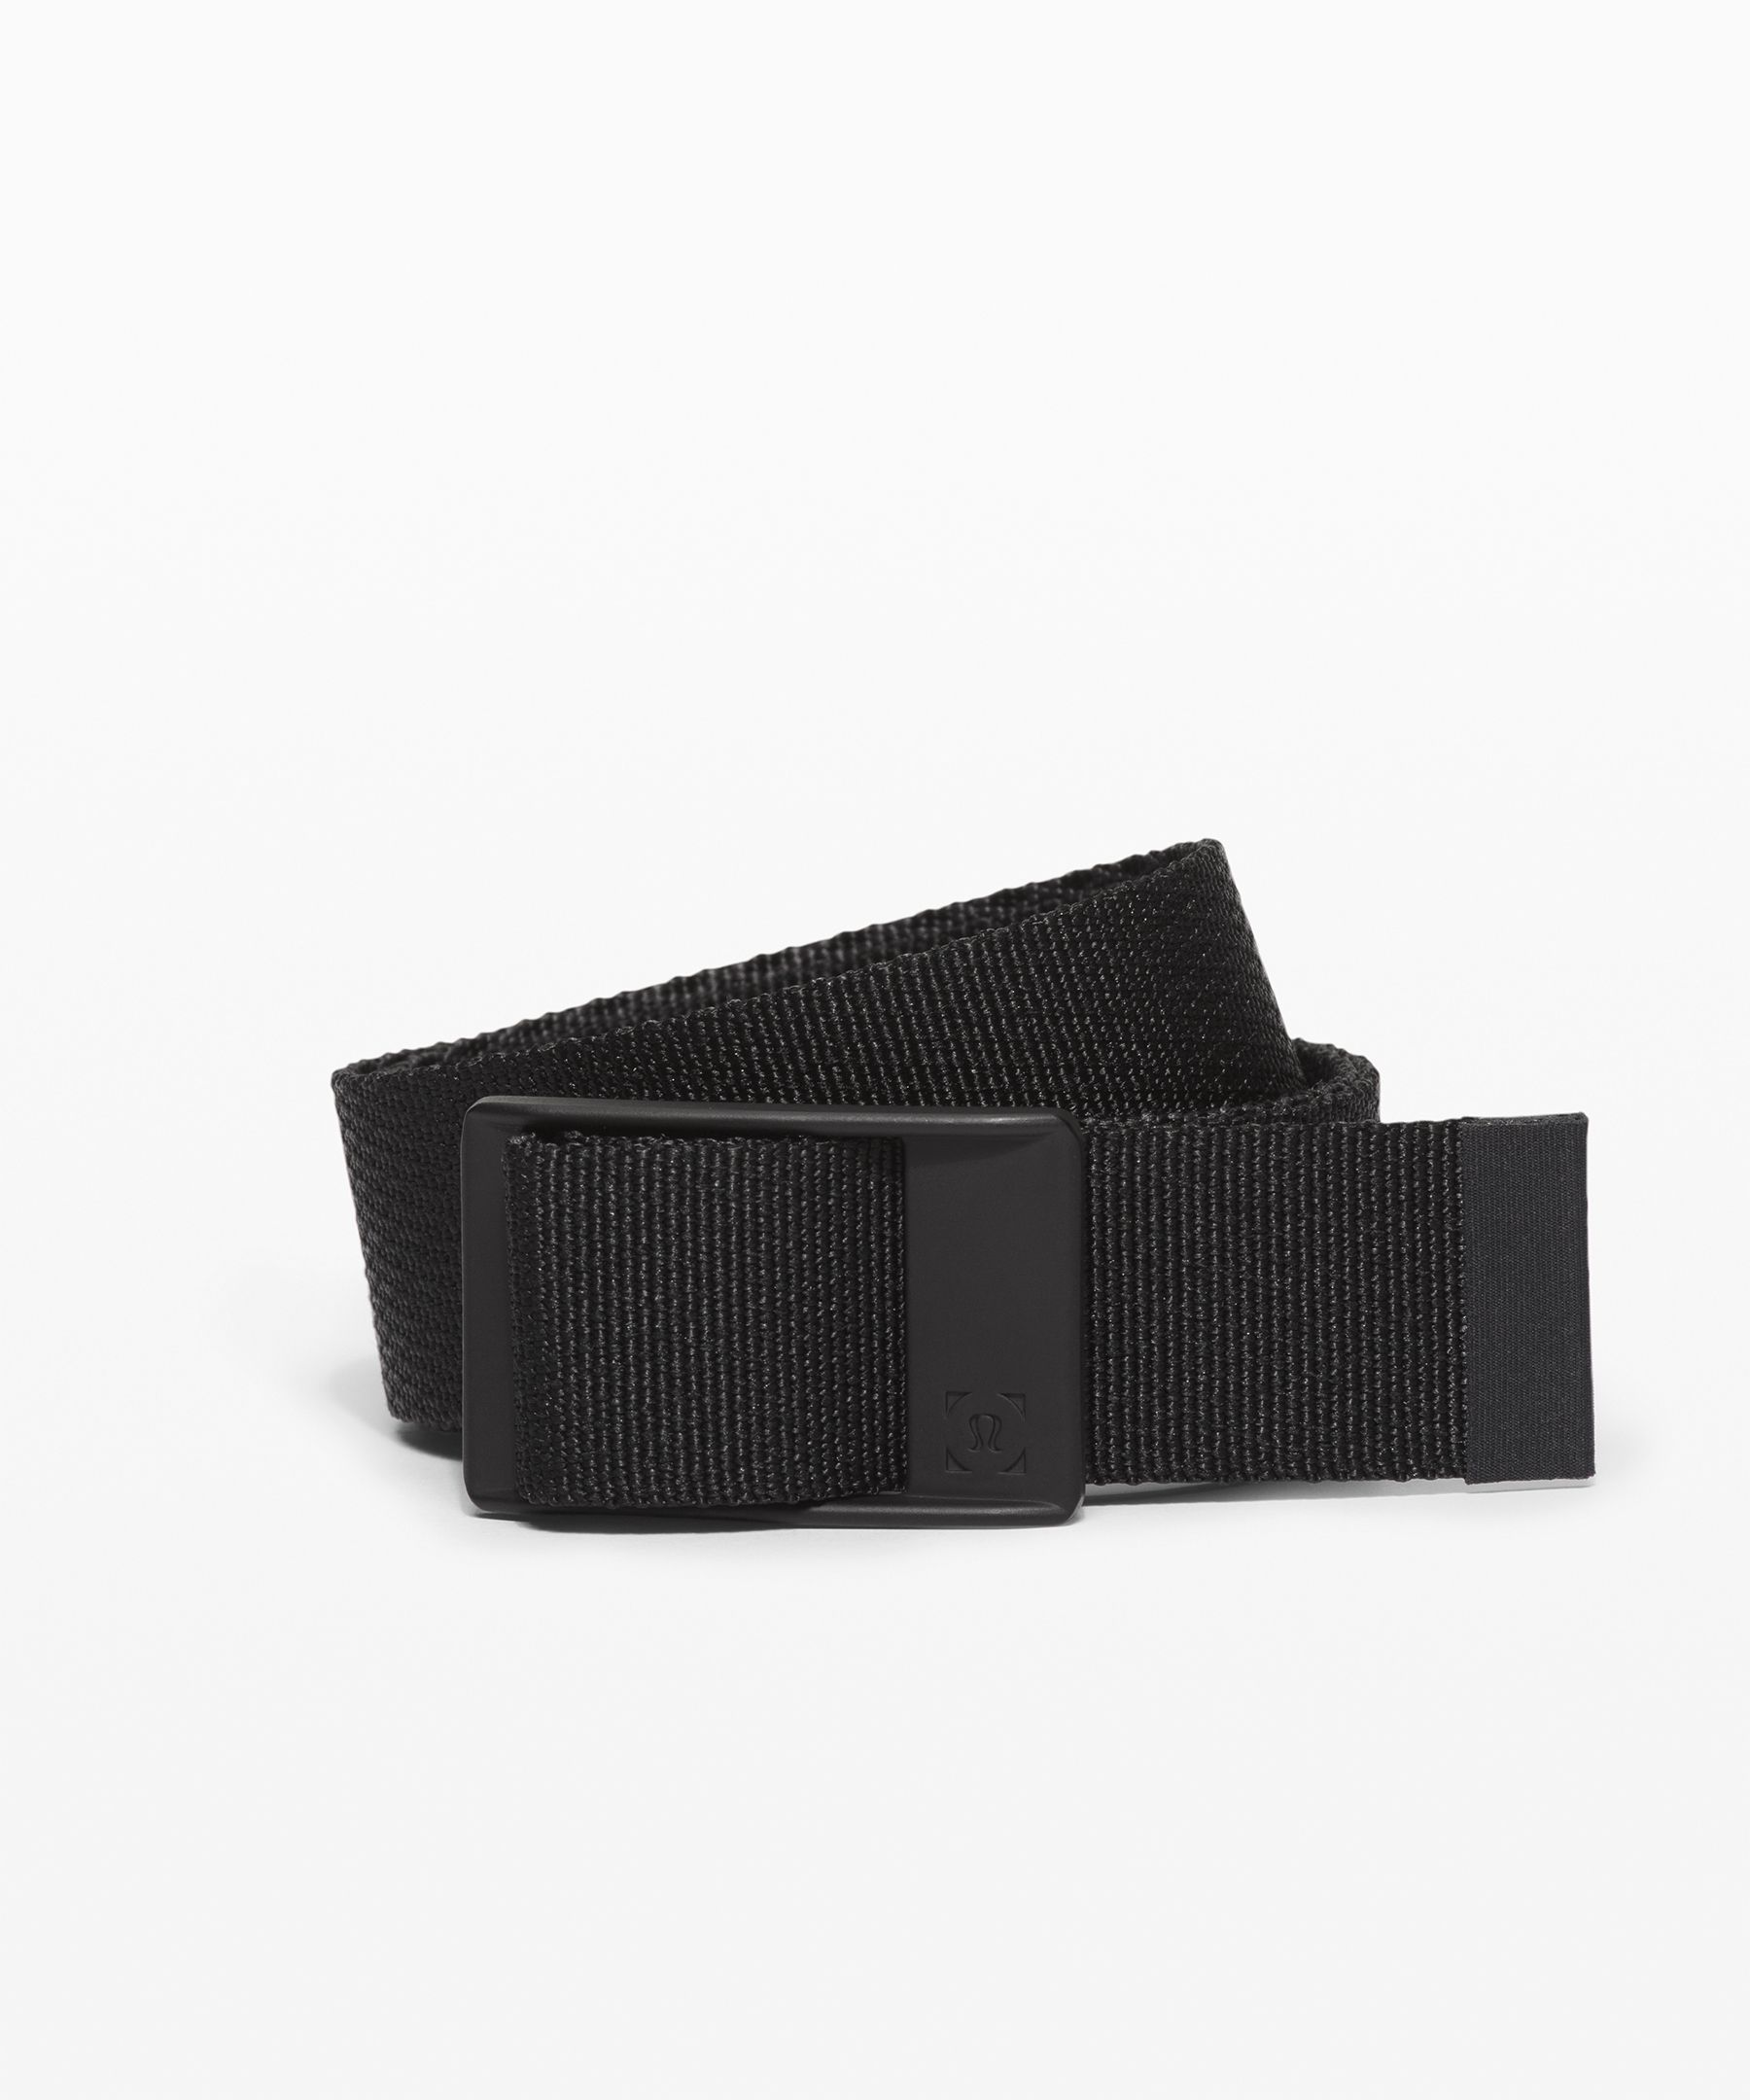 Lululemon Commission Belt In Black